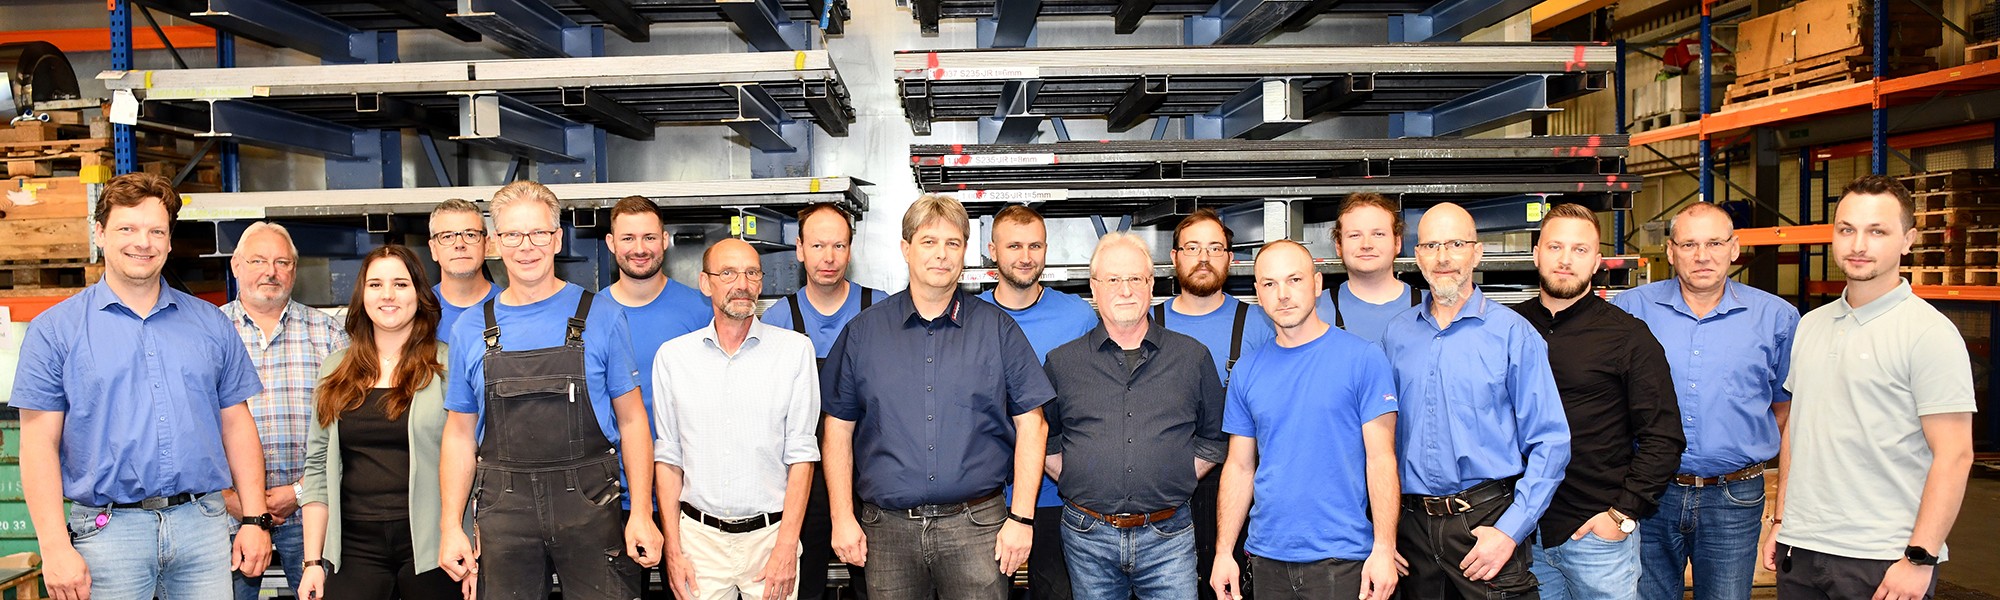 The entire Technologiepool GmbH team